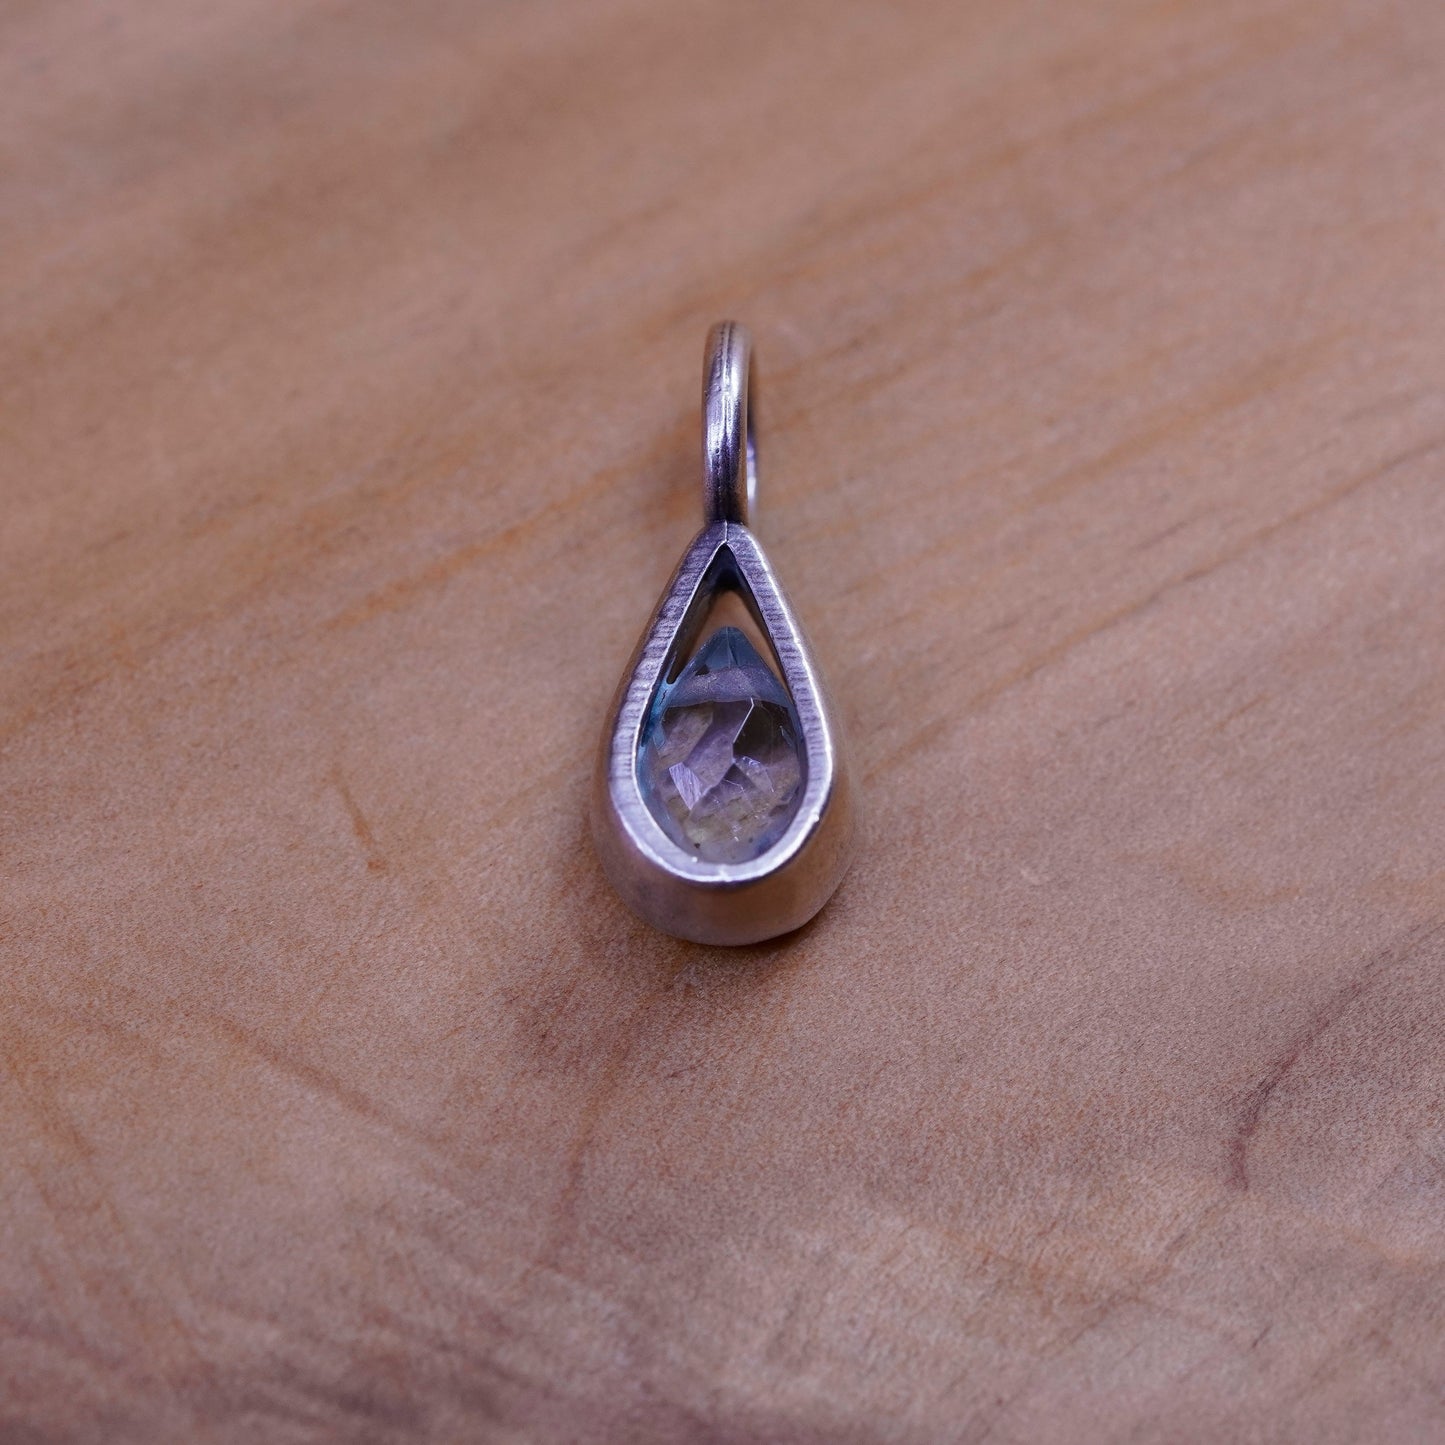 Vintage Sterling silver handmade pendant, 925 charm with teardrop topaz